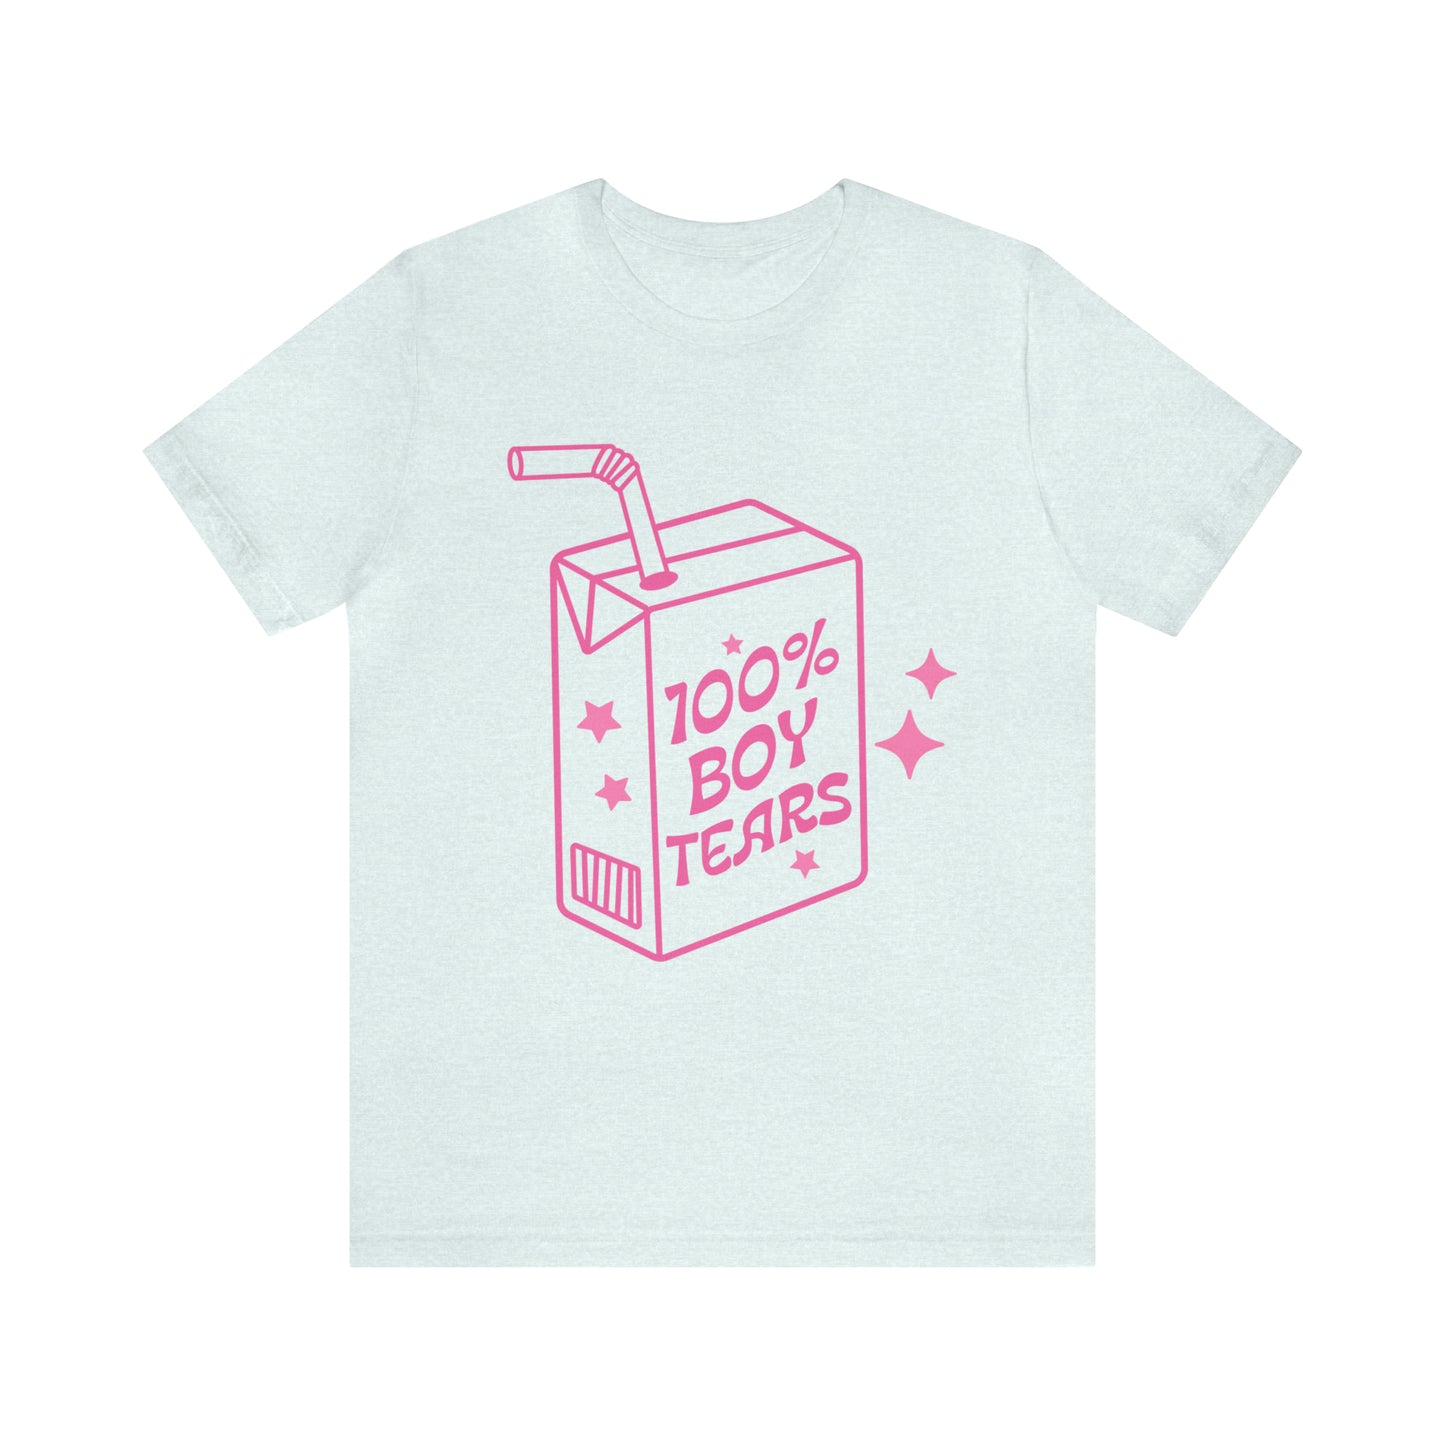 100% Boy Tears Funny Sarcastic Shirt for Girls